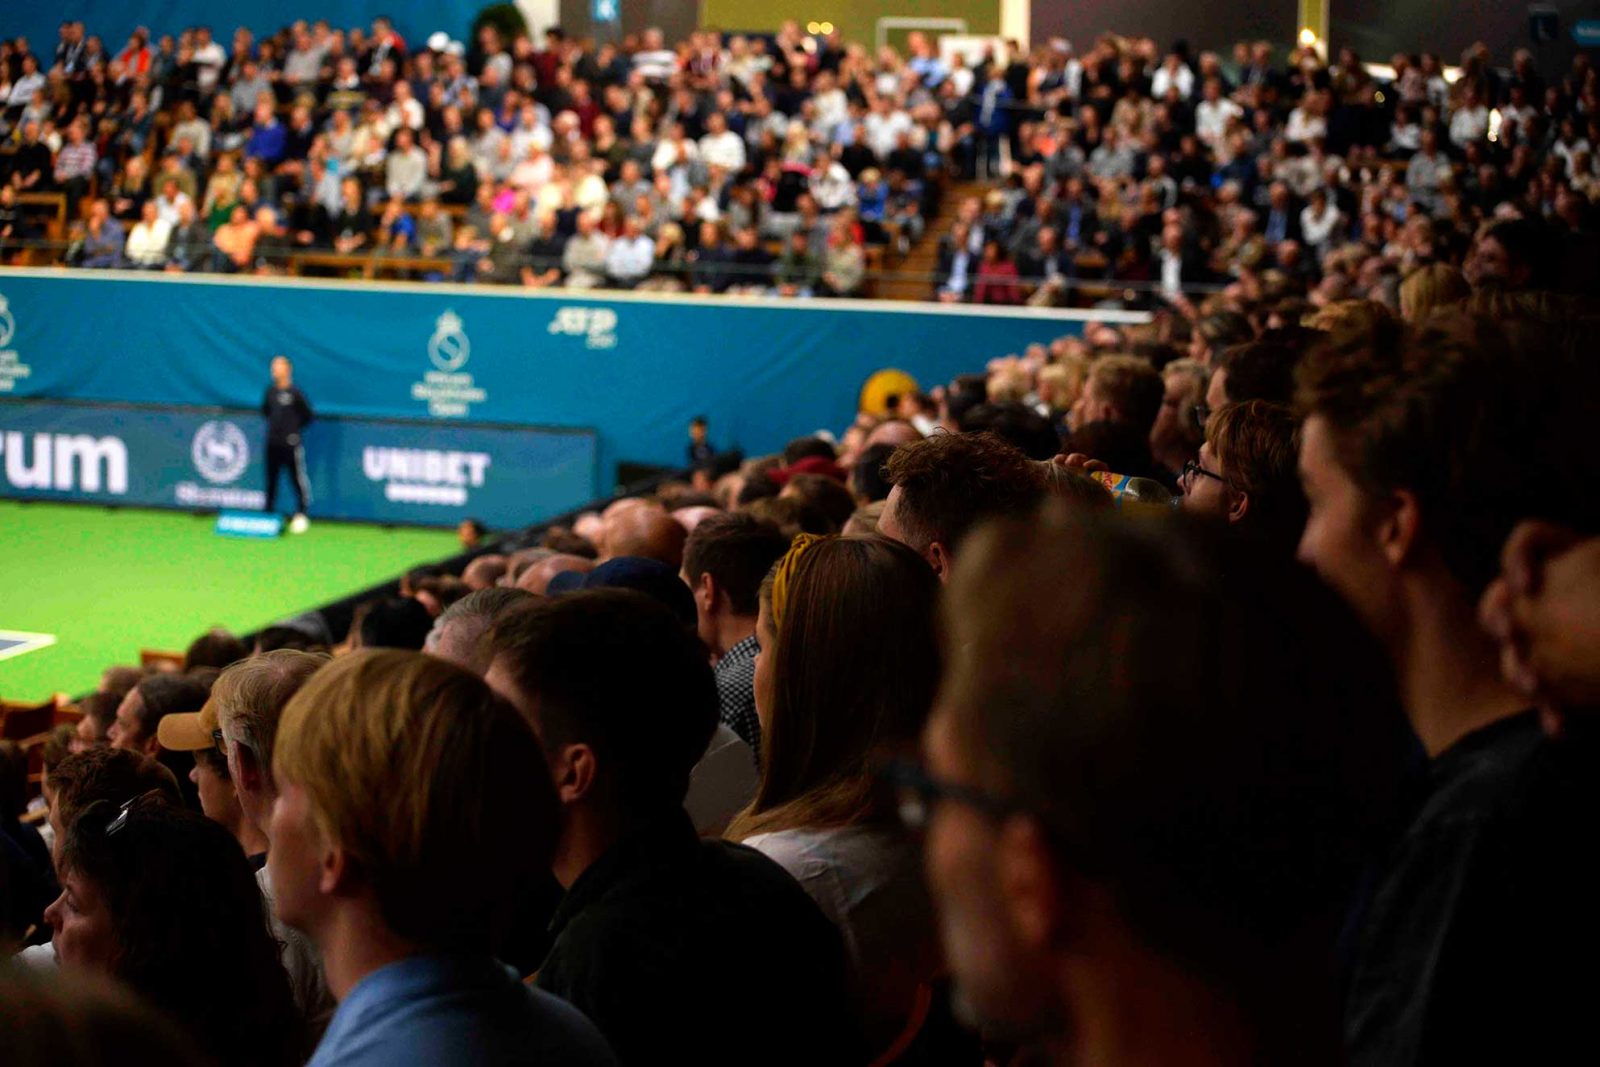 ATP Stockholm Open